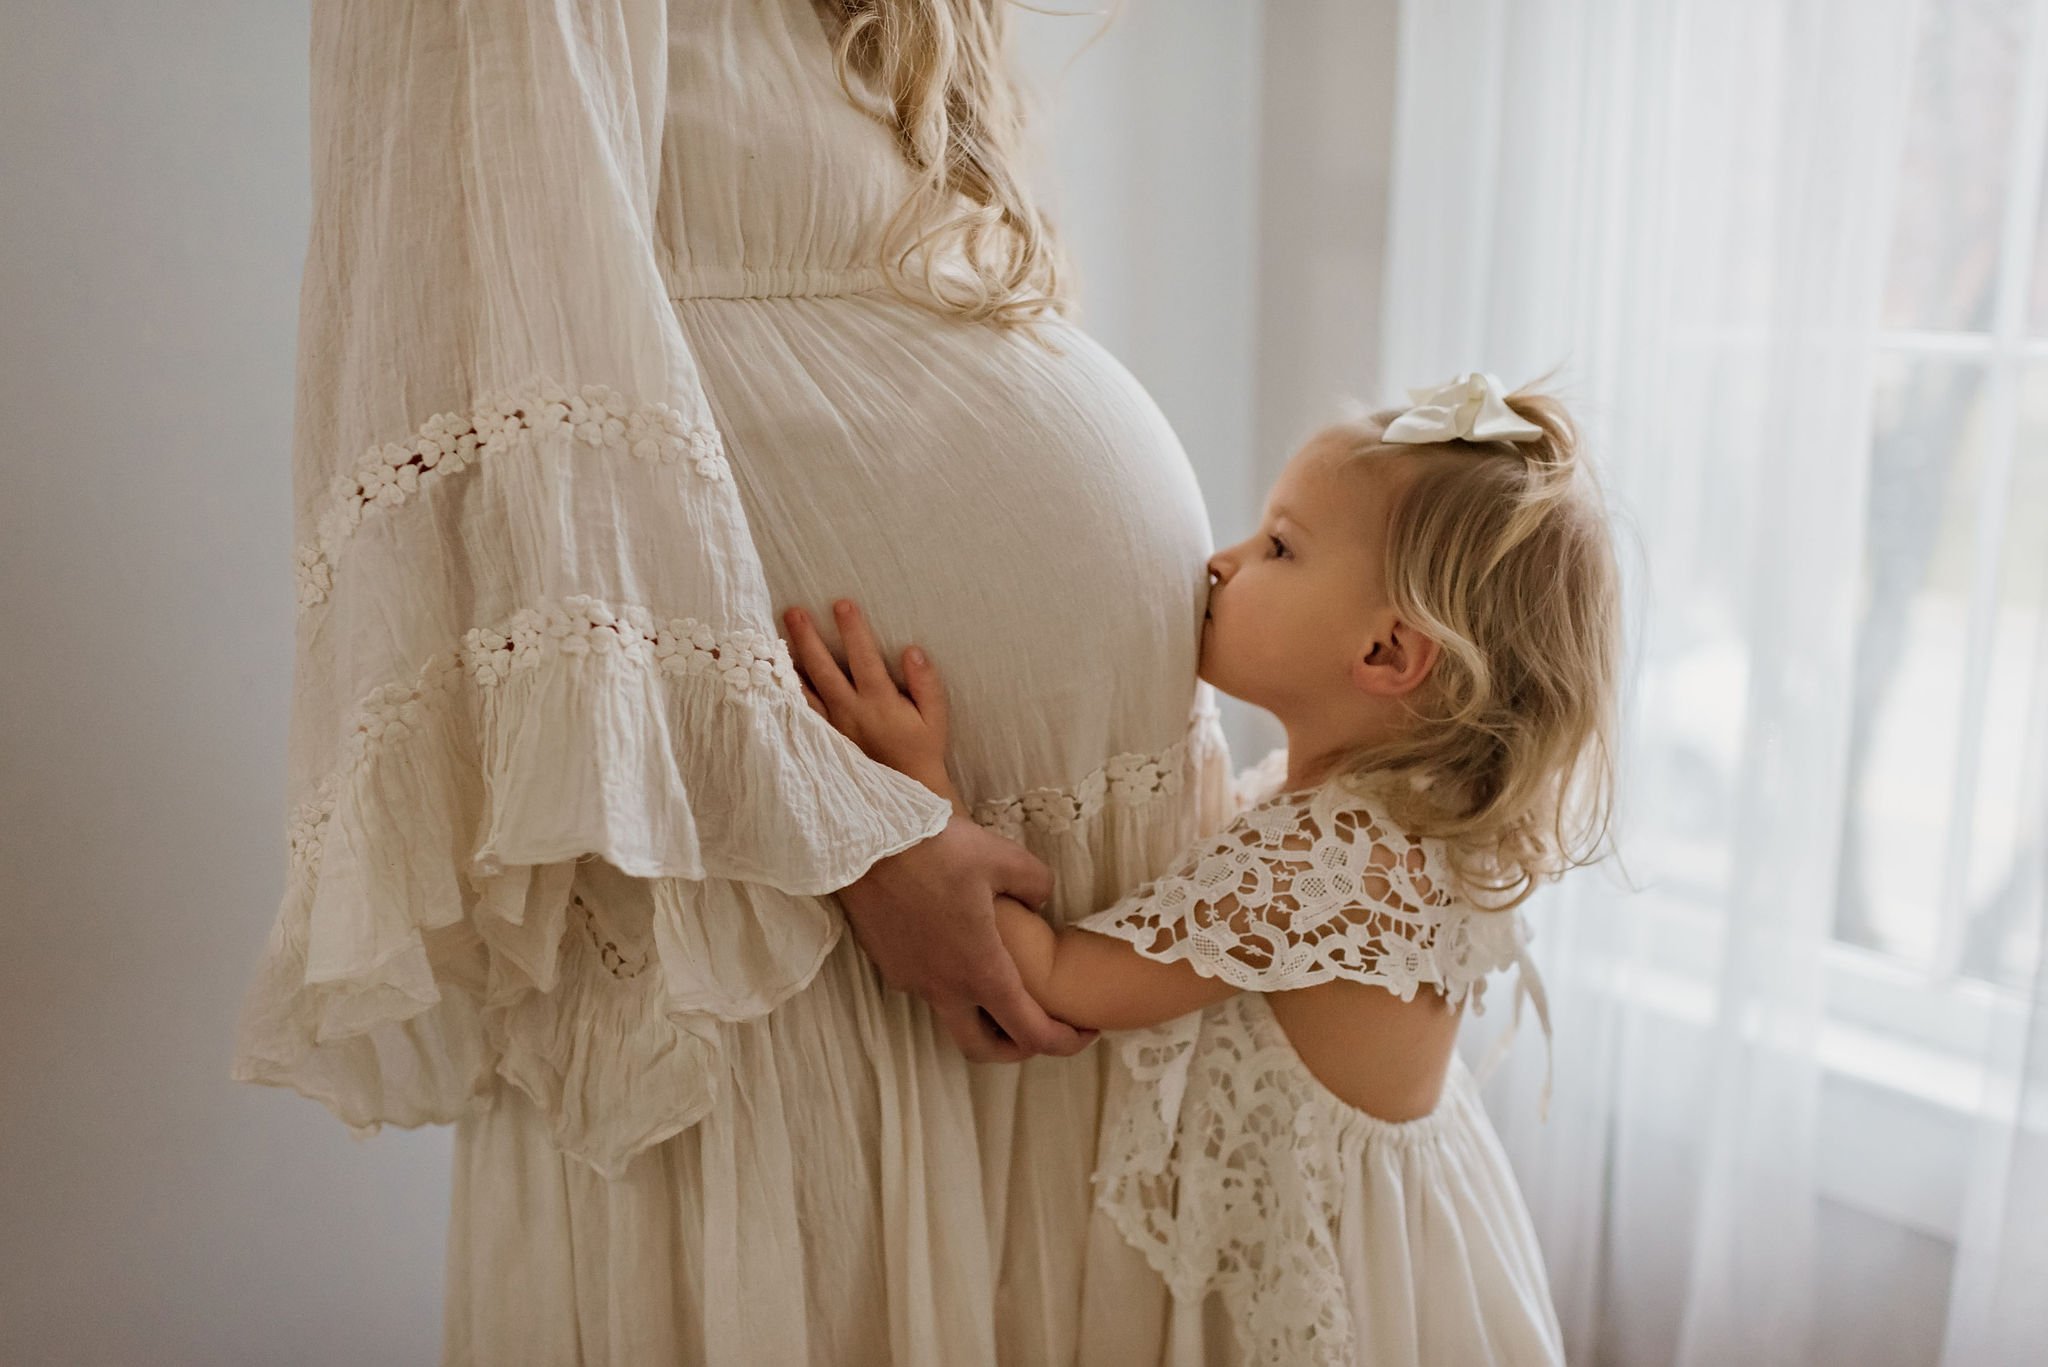 medina-ohio-studio-maternity-photography-family-session-4.jpeg